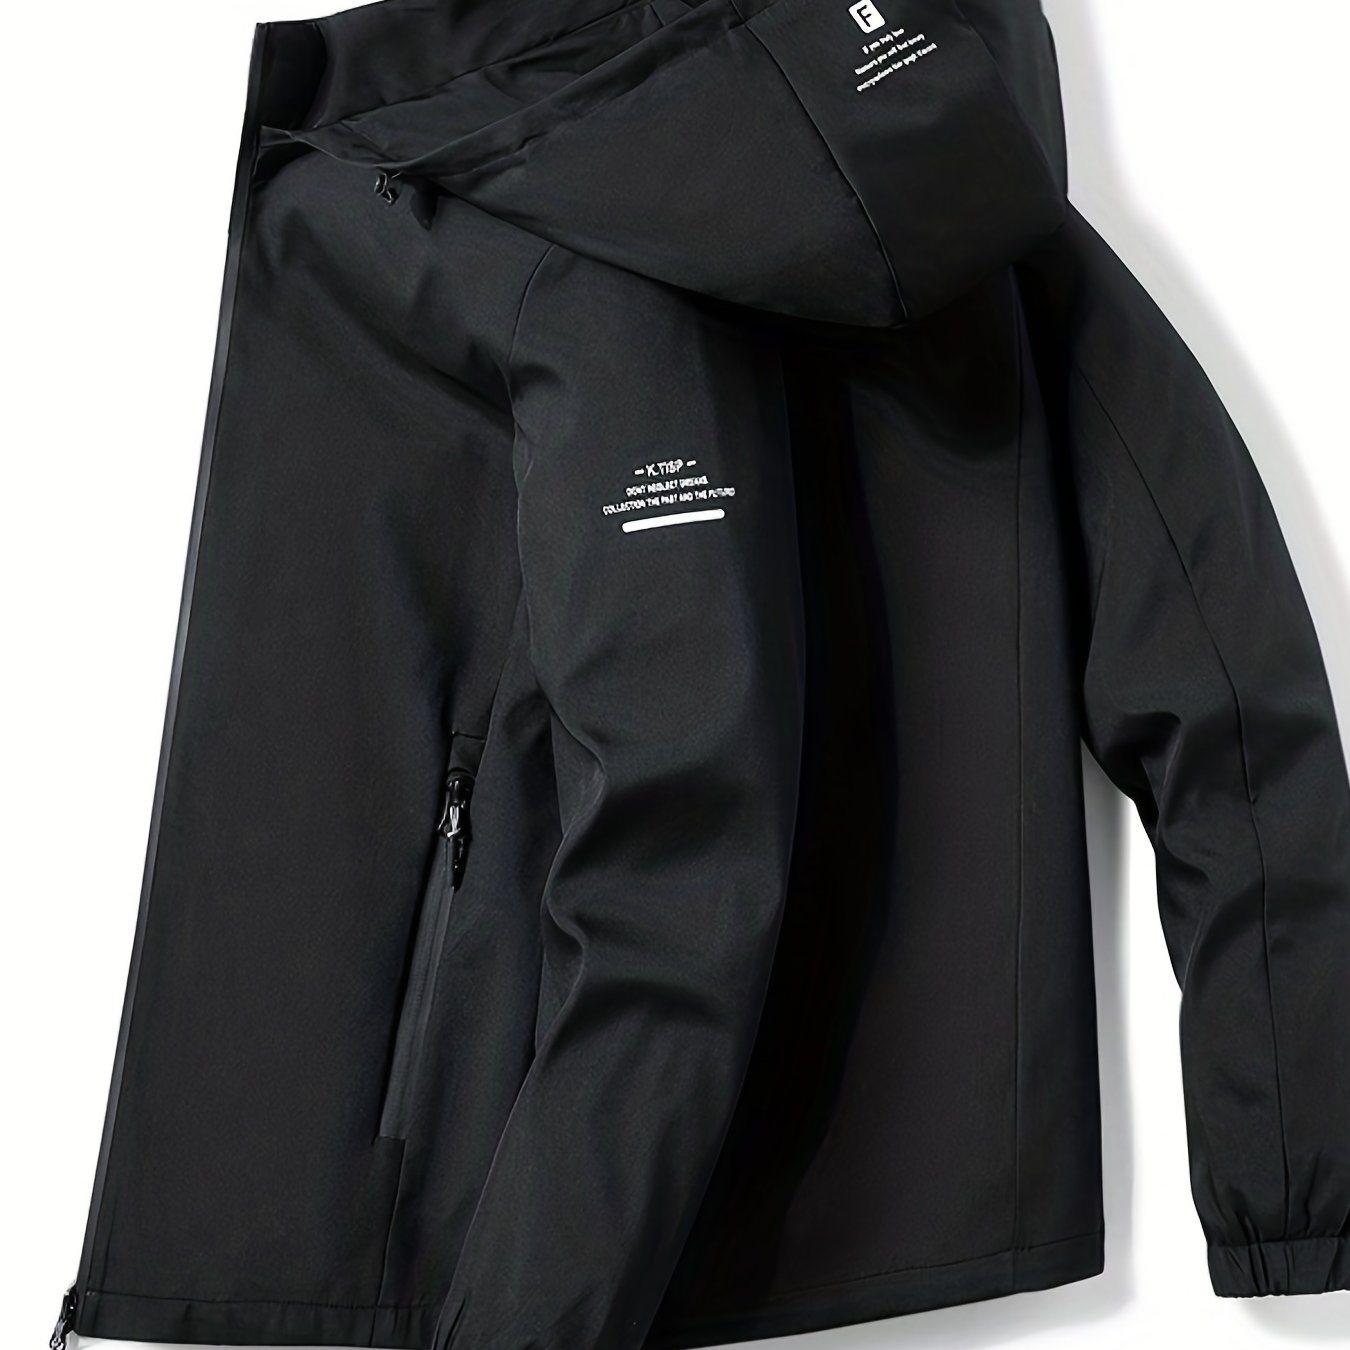 mens soft shell hooded jacket casual windproof waterproof zip up detachable hood comfy jacket for outdoor